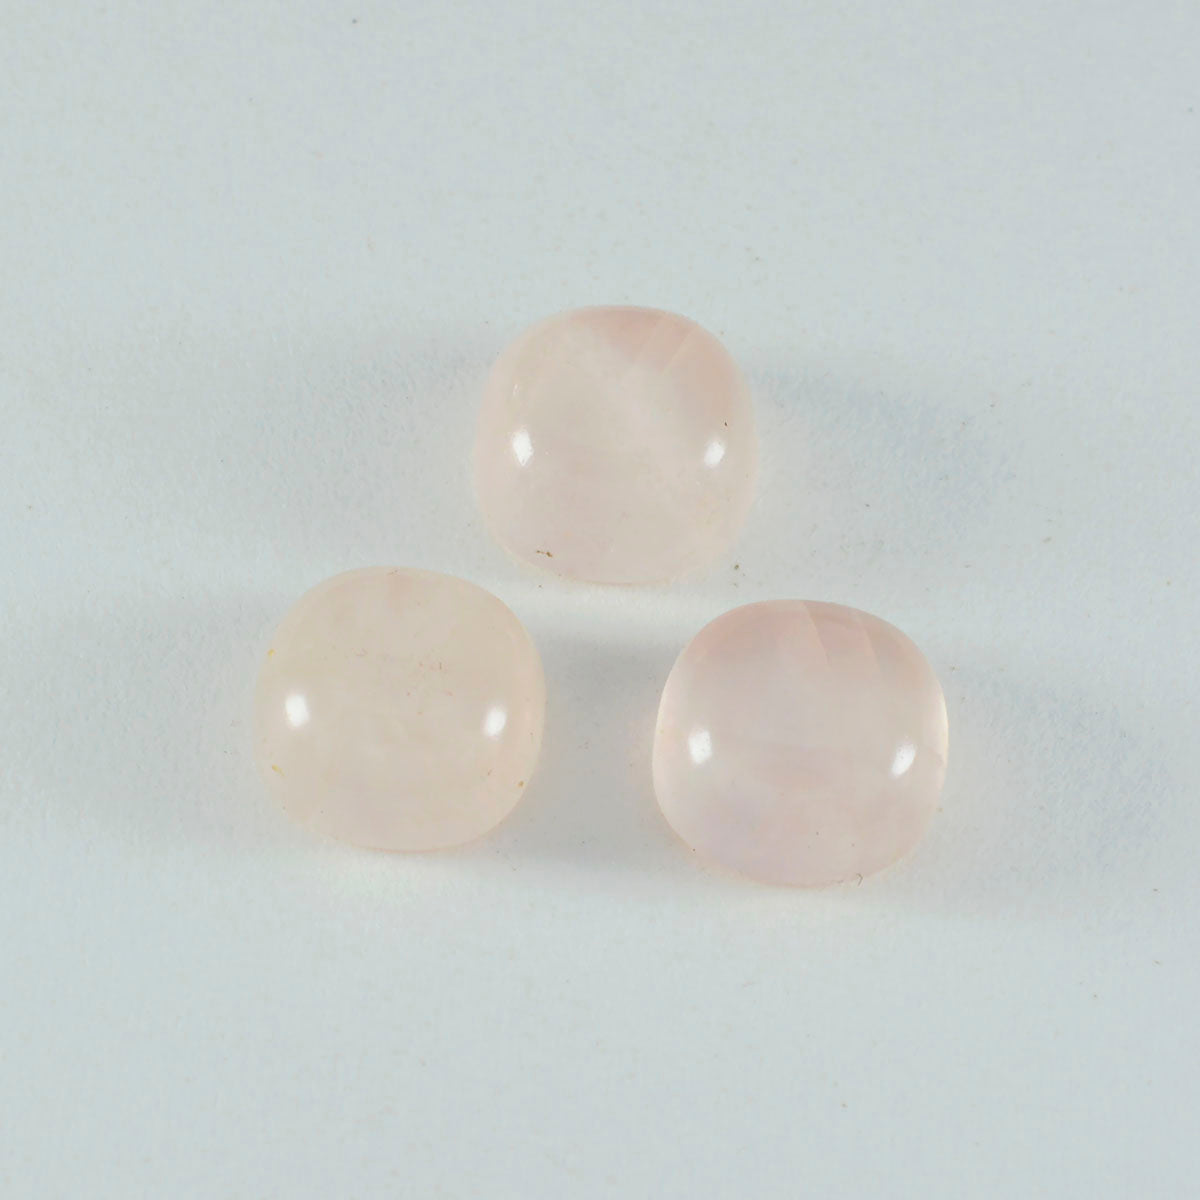 riyogems 1 pz cabochon di quarzo rosa rosa 12x12 mm a forma di cuscino, gemma di bella qualità